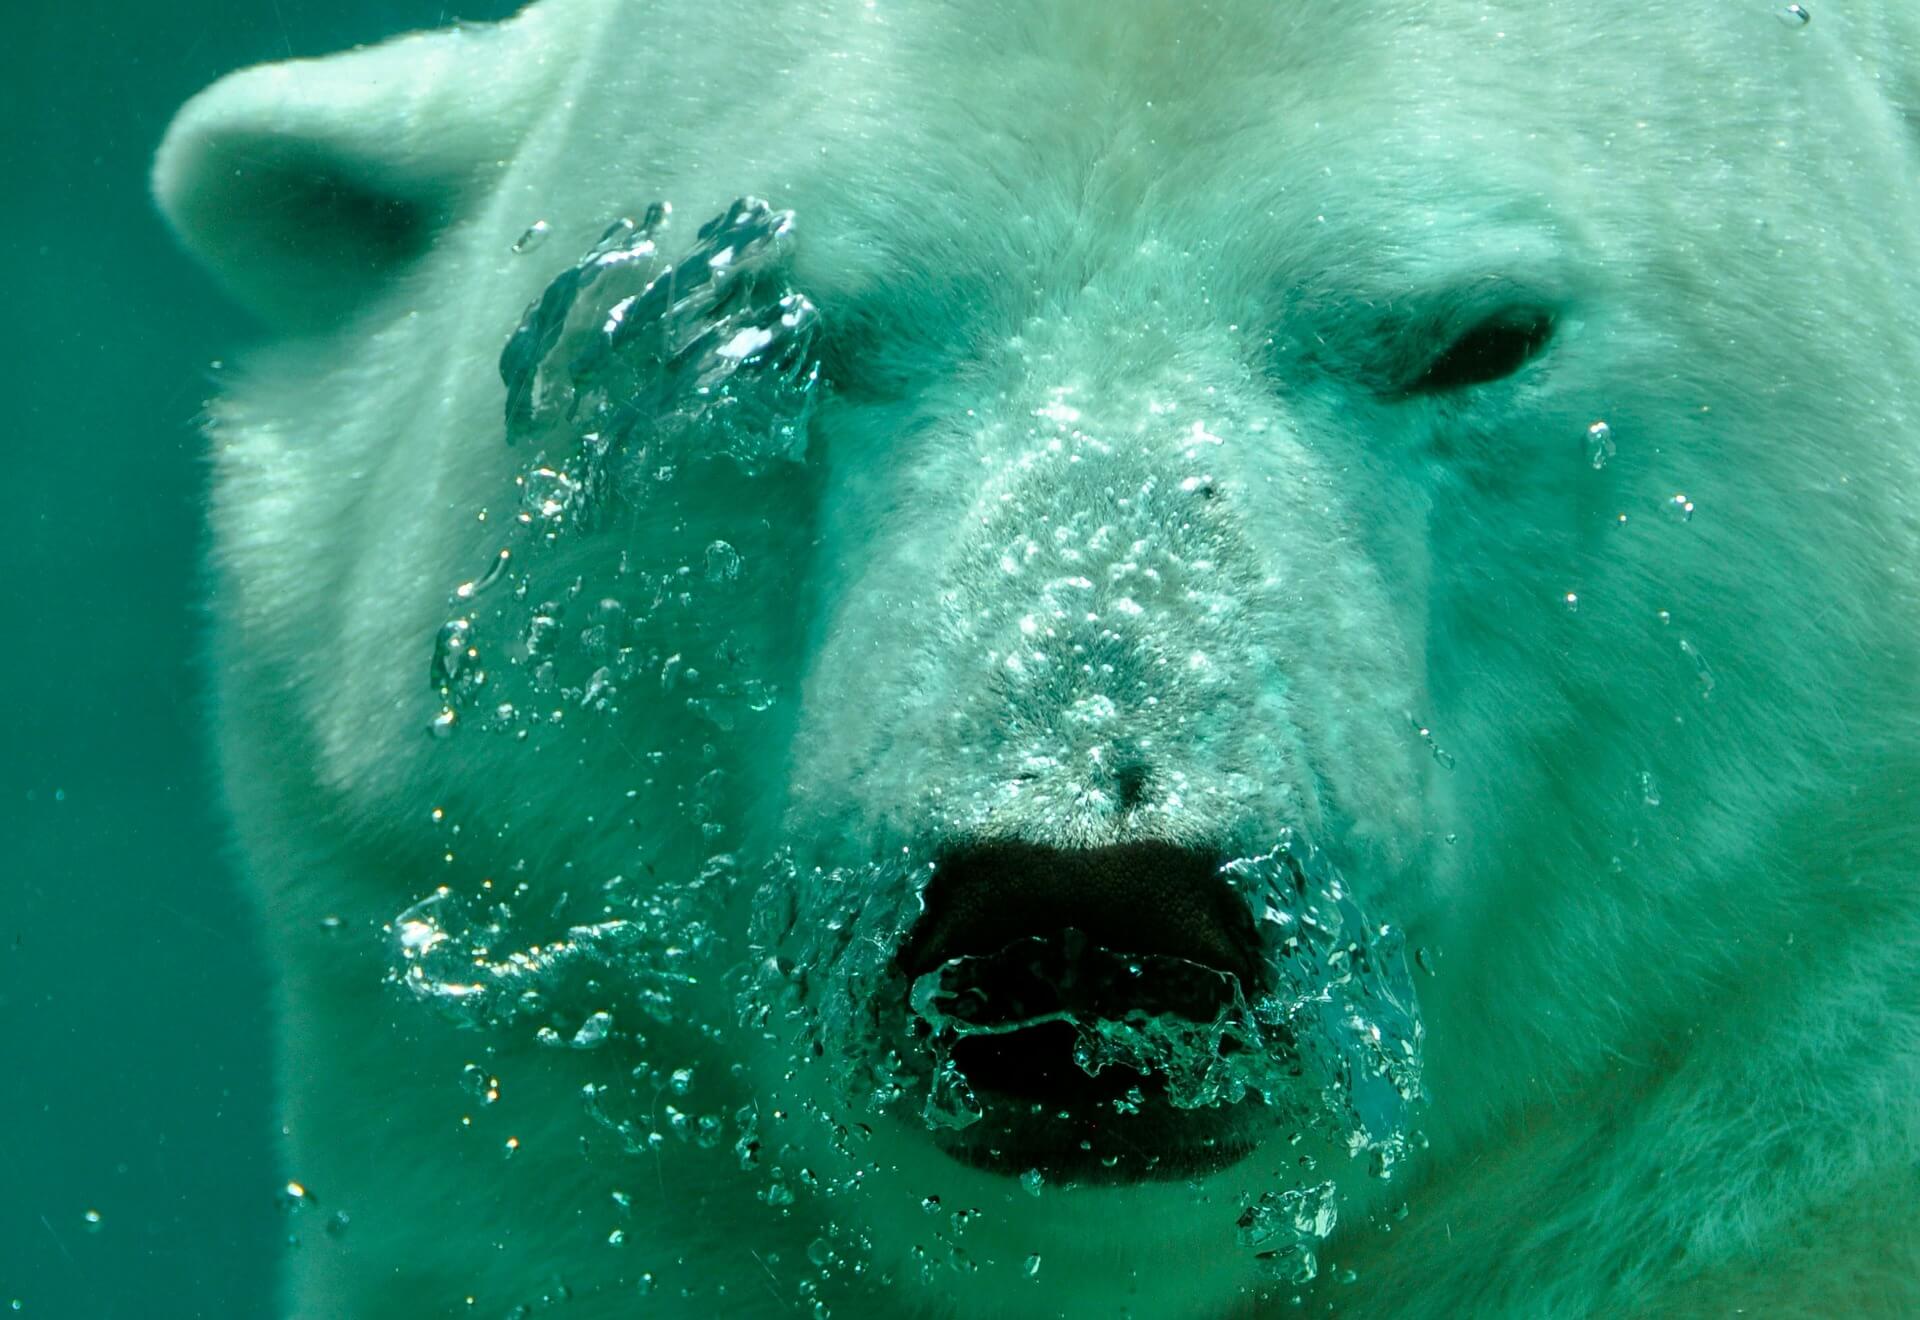 Polar bear inspired material for heat insulation